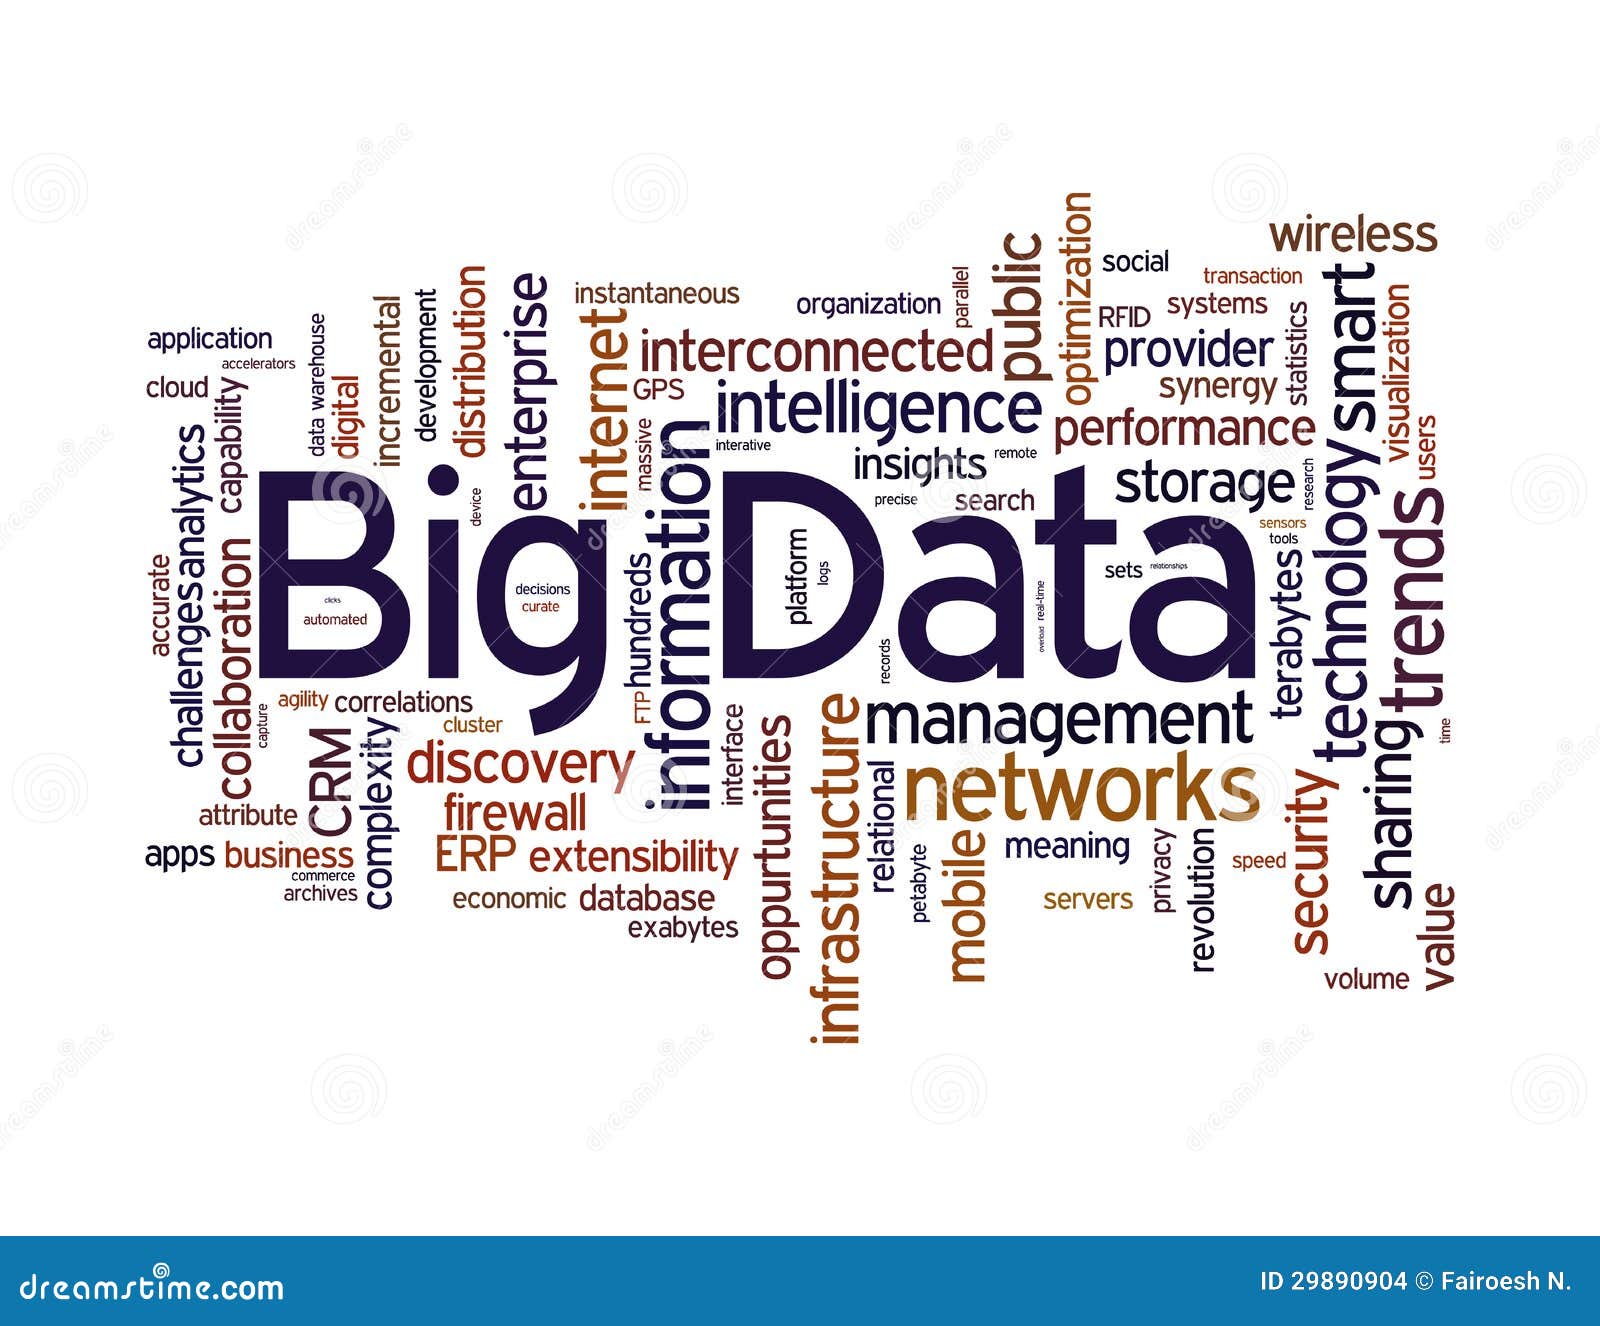 big data technologies tutorial